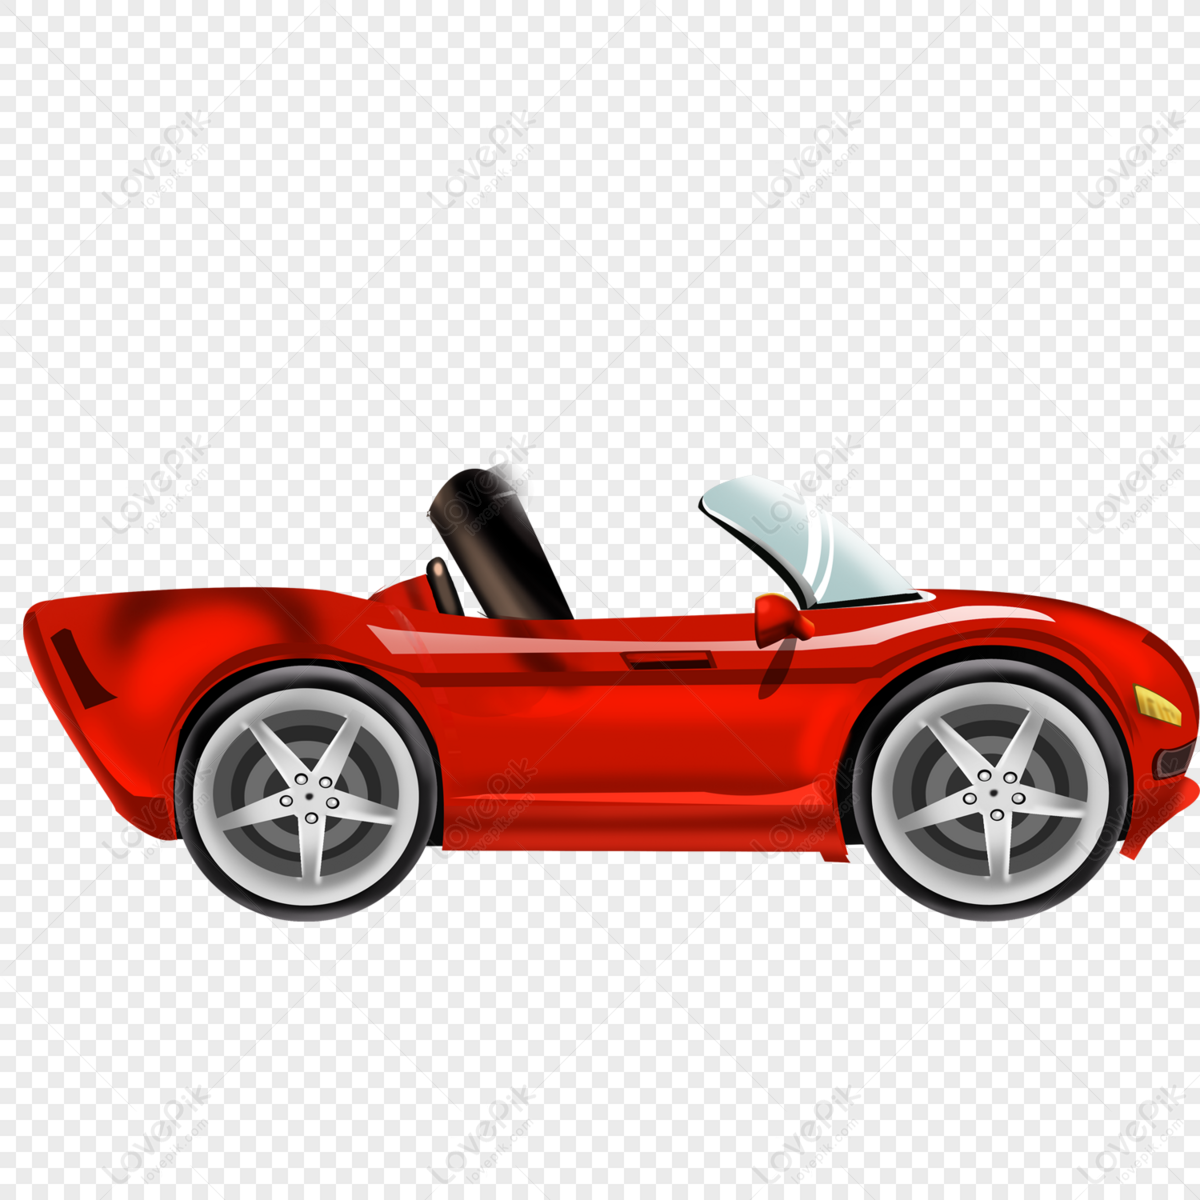 A sports car, car, drive, sports png hd transparent image